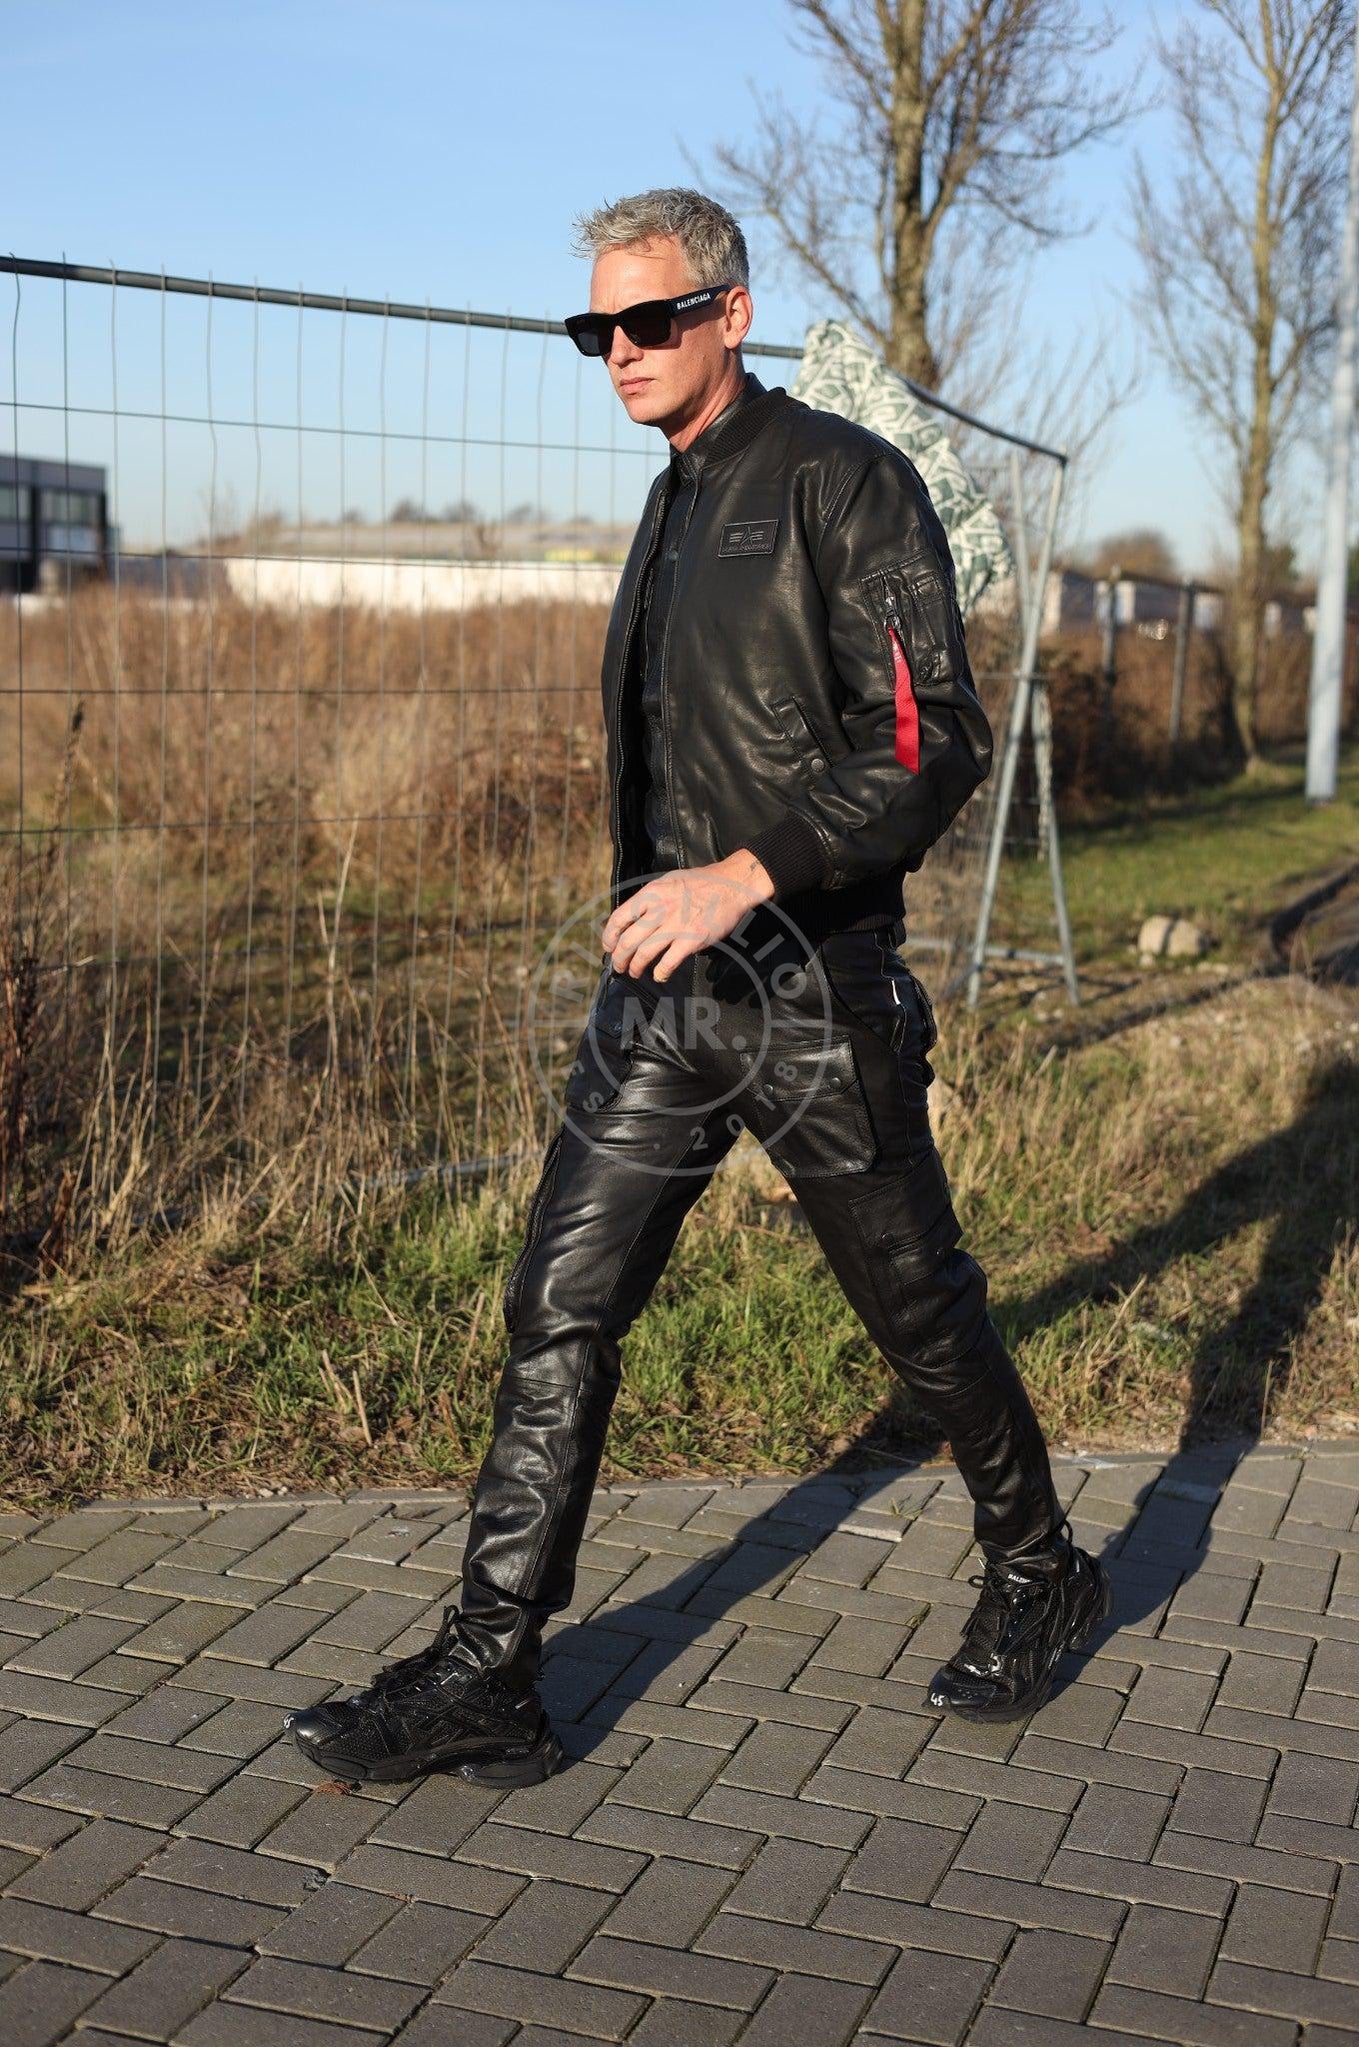 Black Leather Pants - Snap Pockets by MR. Riegillio